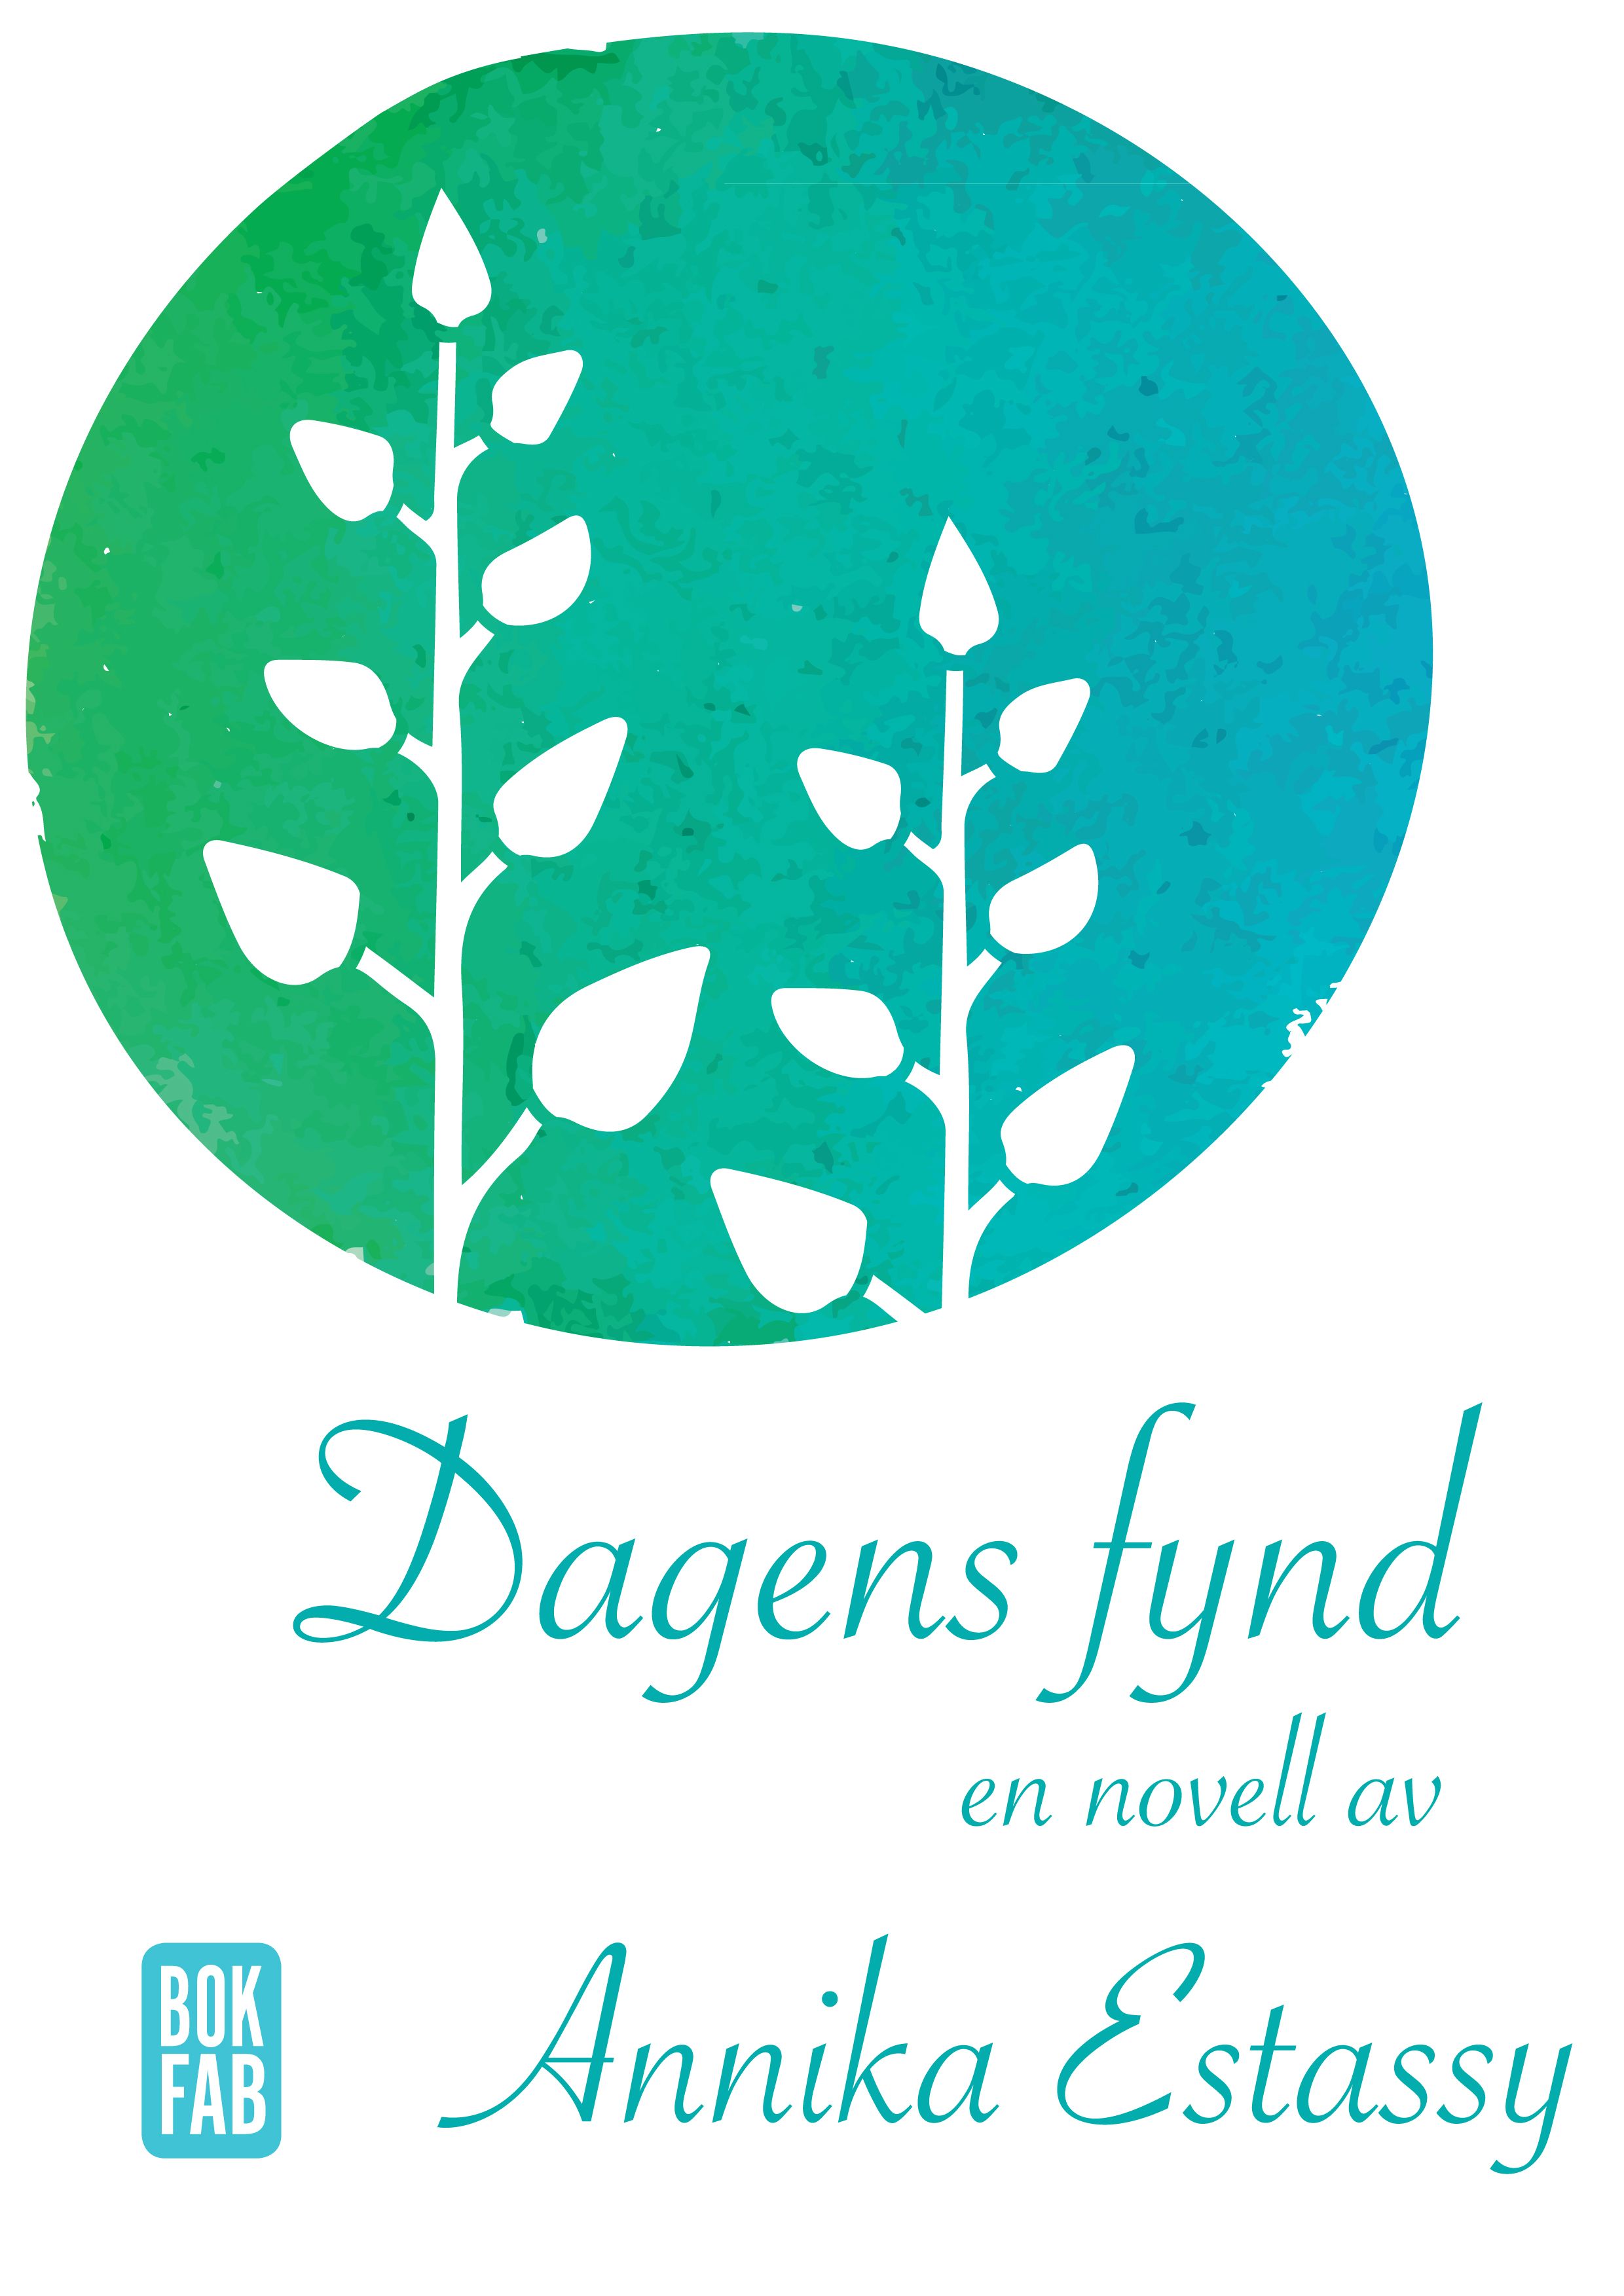 Dagens fynd, eBook by Annika Estassy